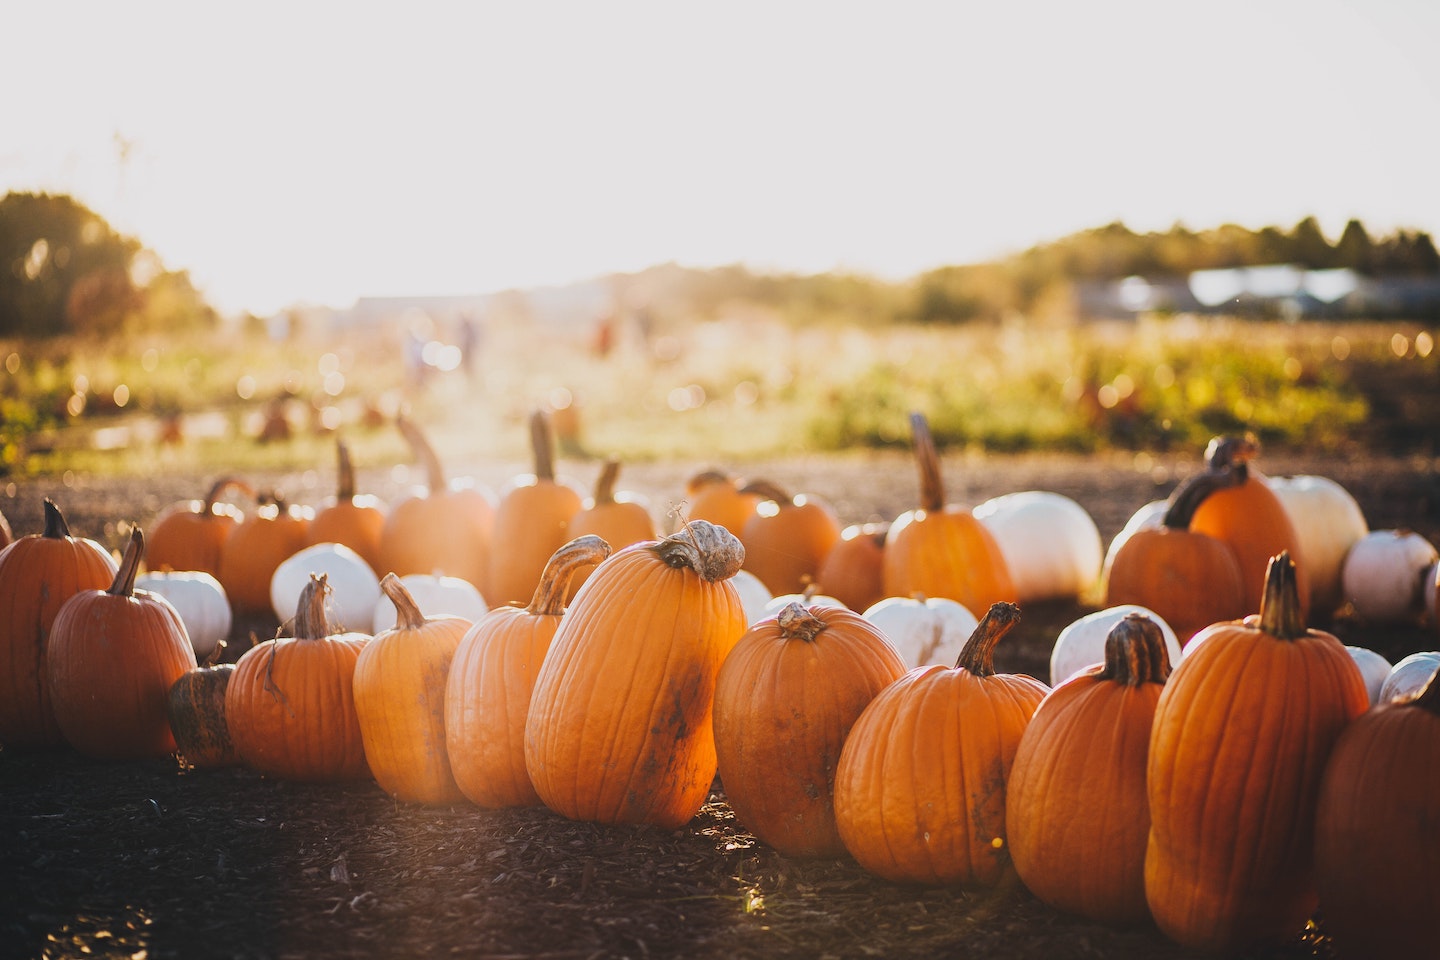 Pumpkins in pumpkin patch during a fall day